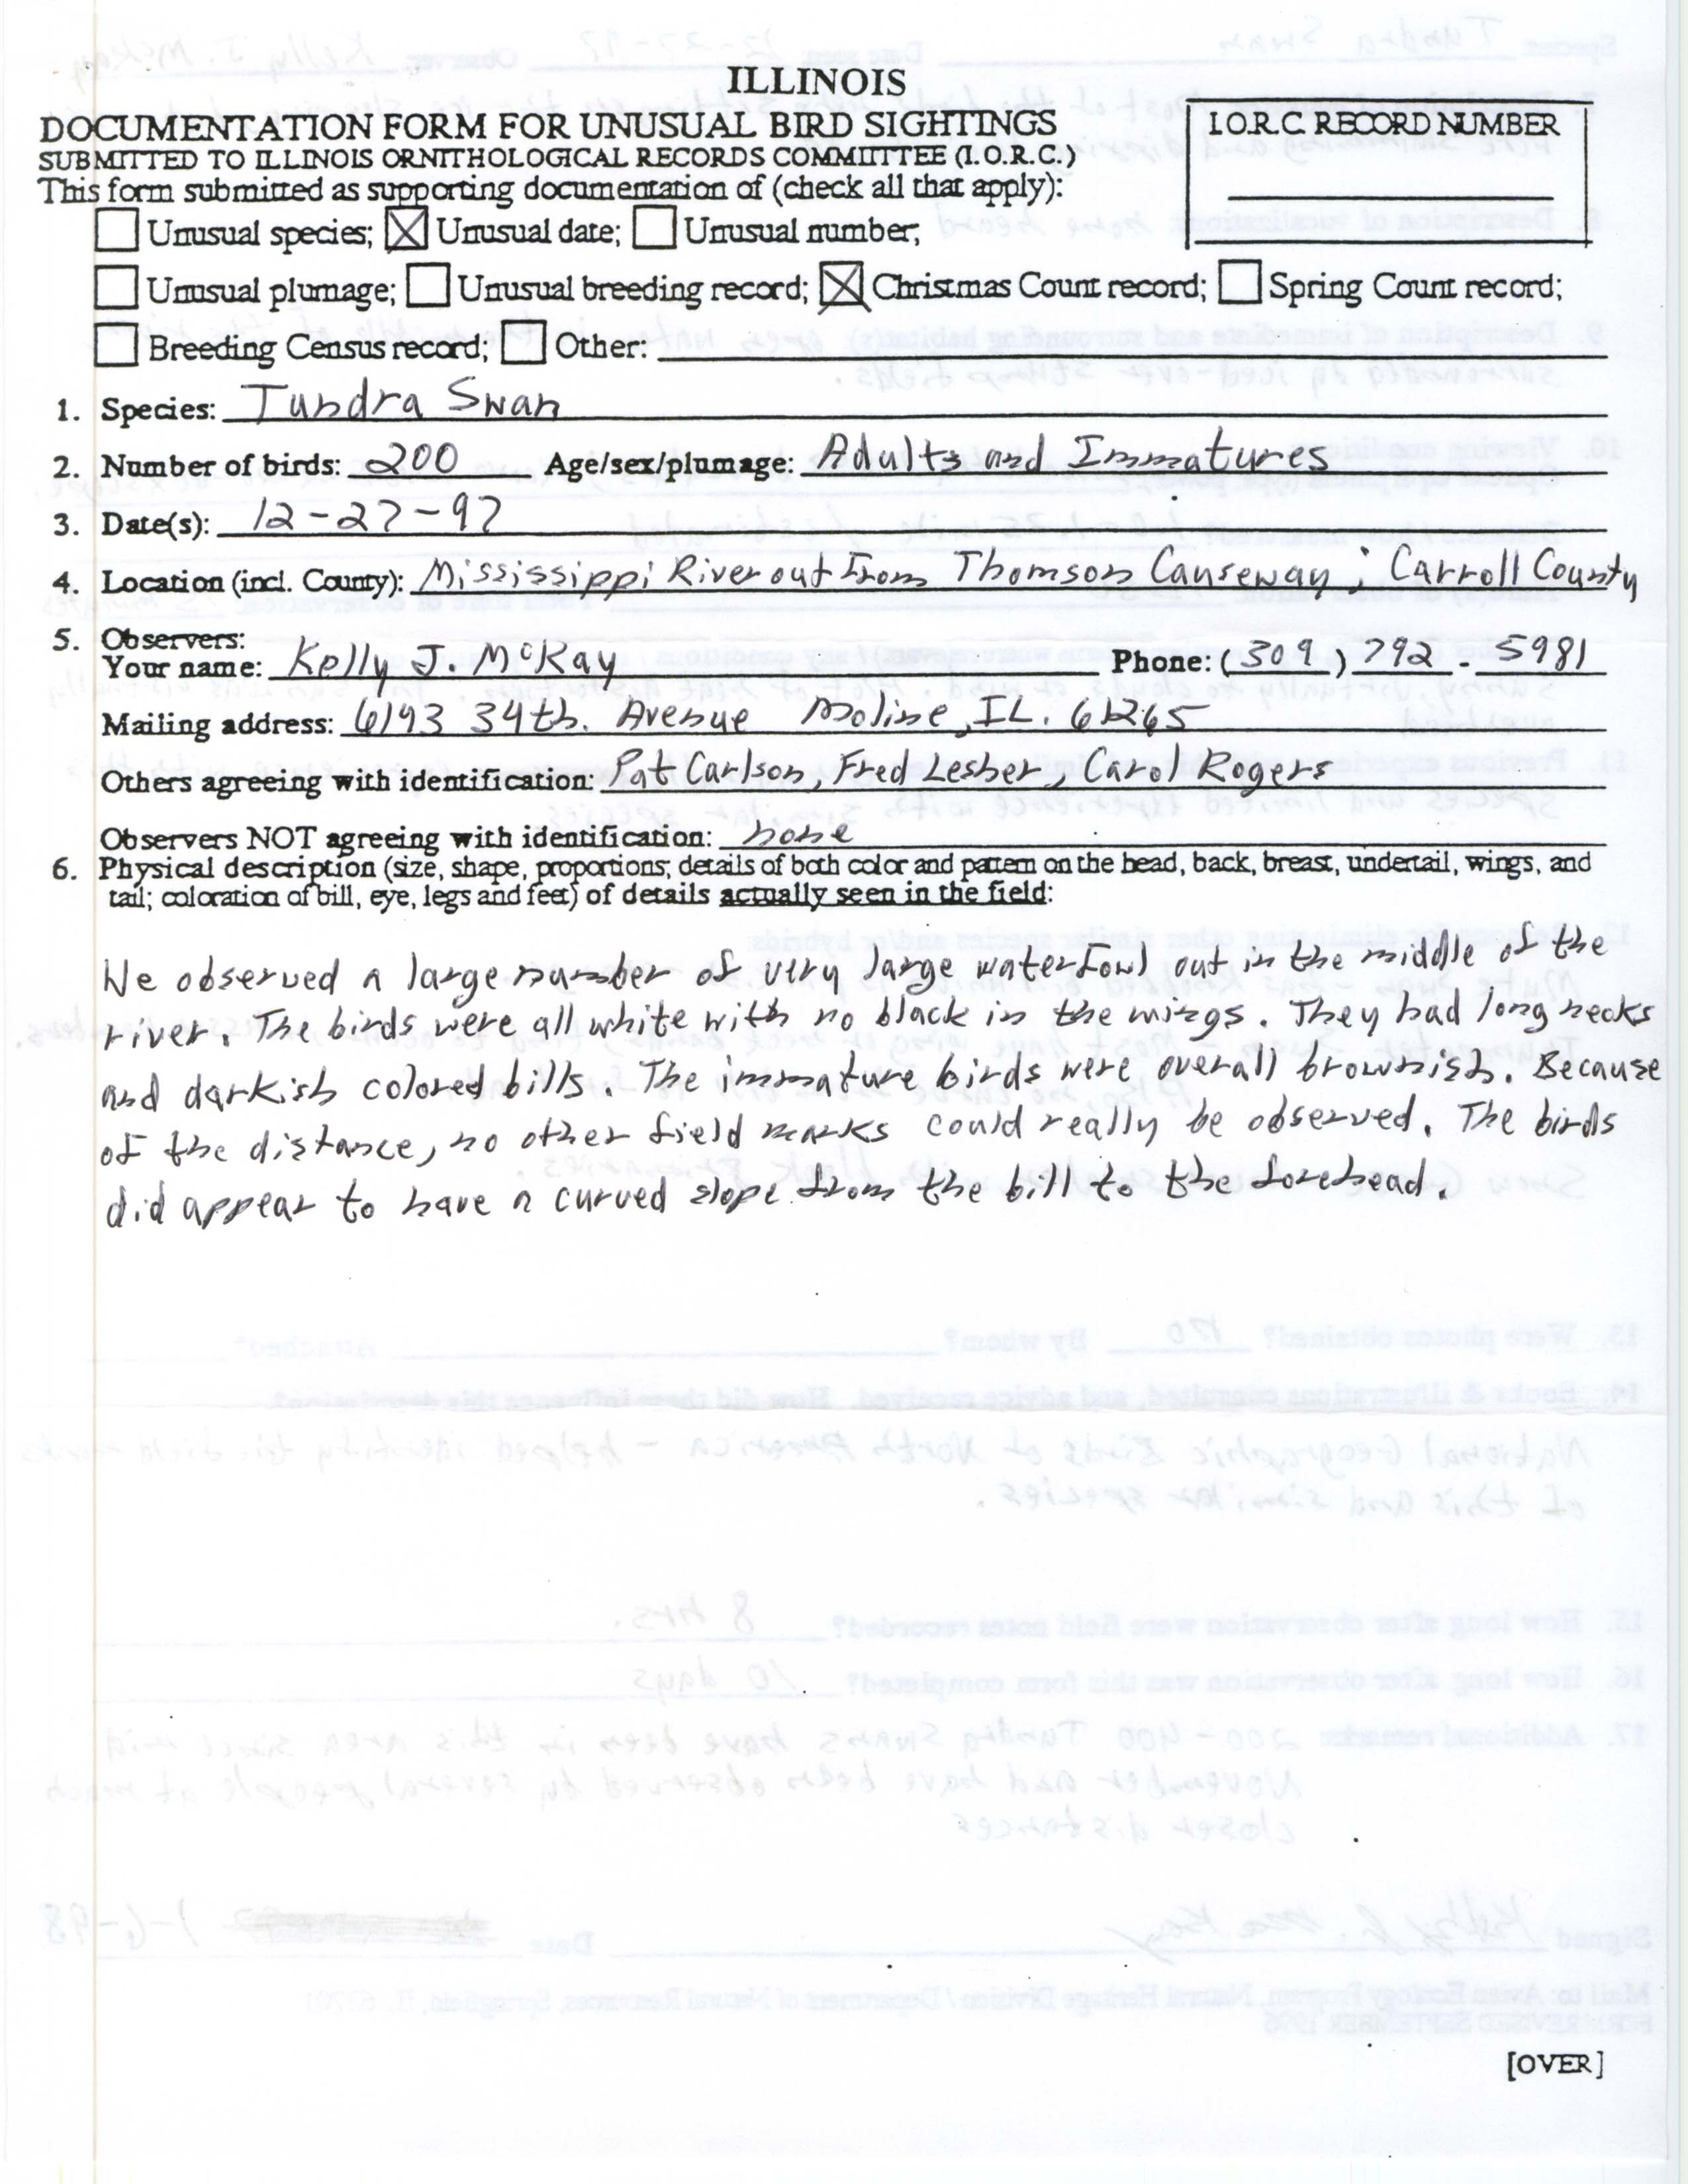 Rare bird documentation form for Tundra Swan at Thomson Causeway, 1997